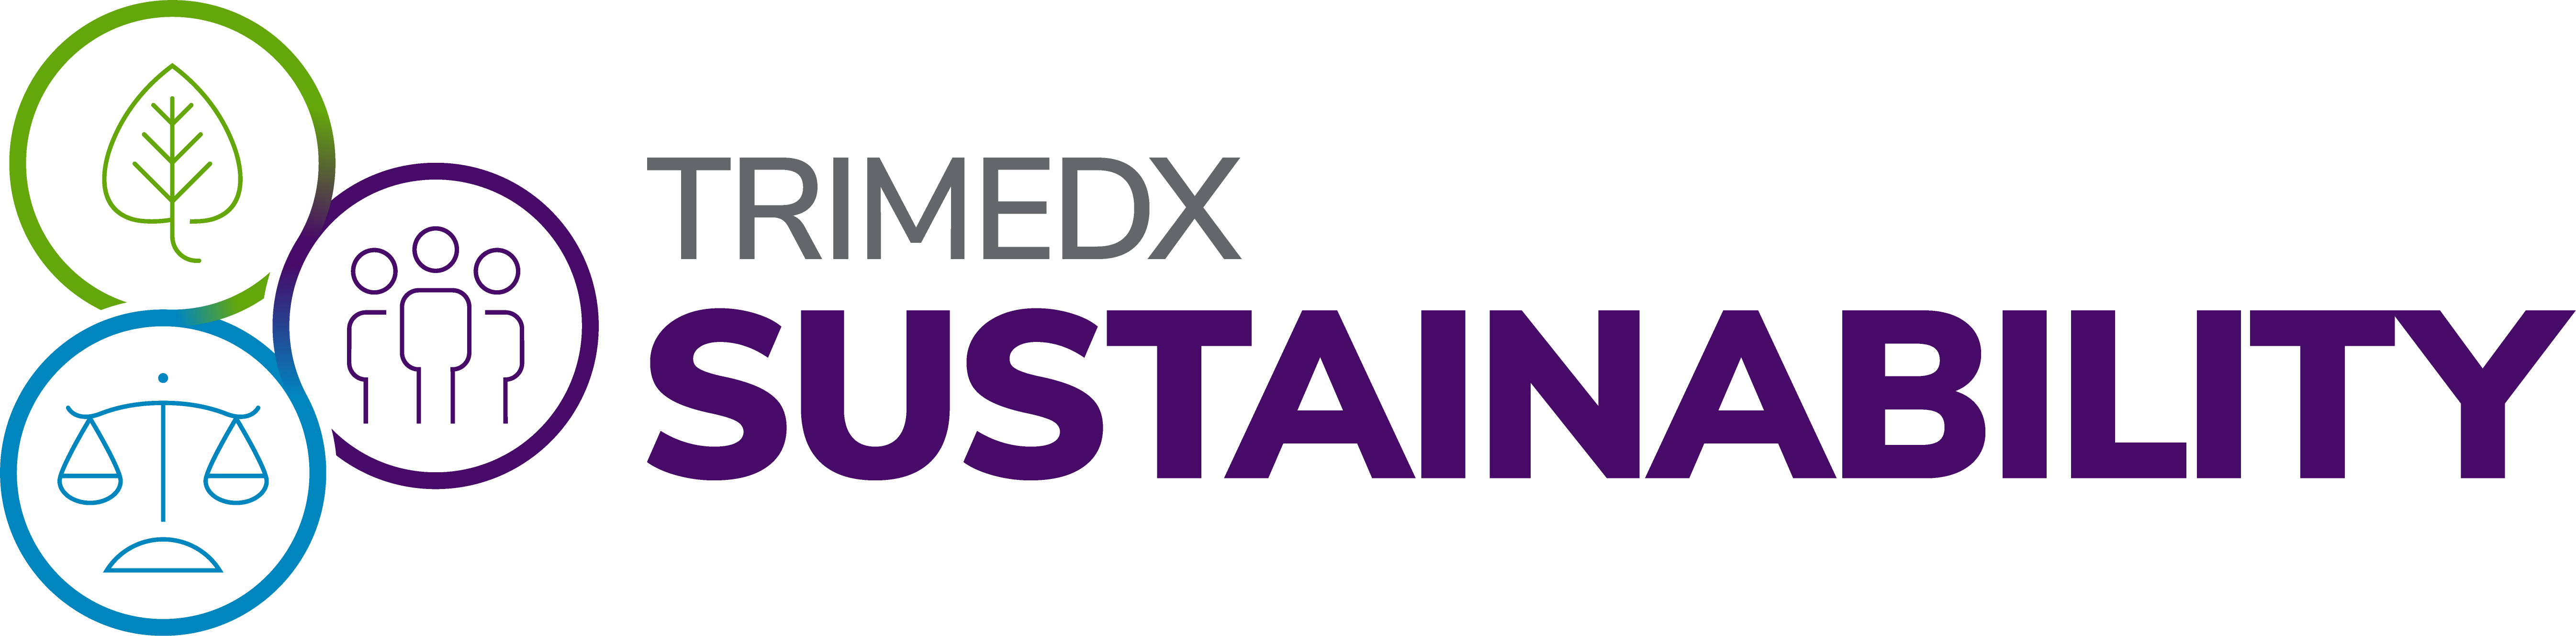 941872-122022 - Logo - TRIMEDX Sustainability wordmark FINAL -  Full color RGB